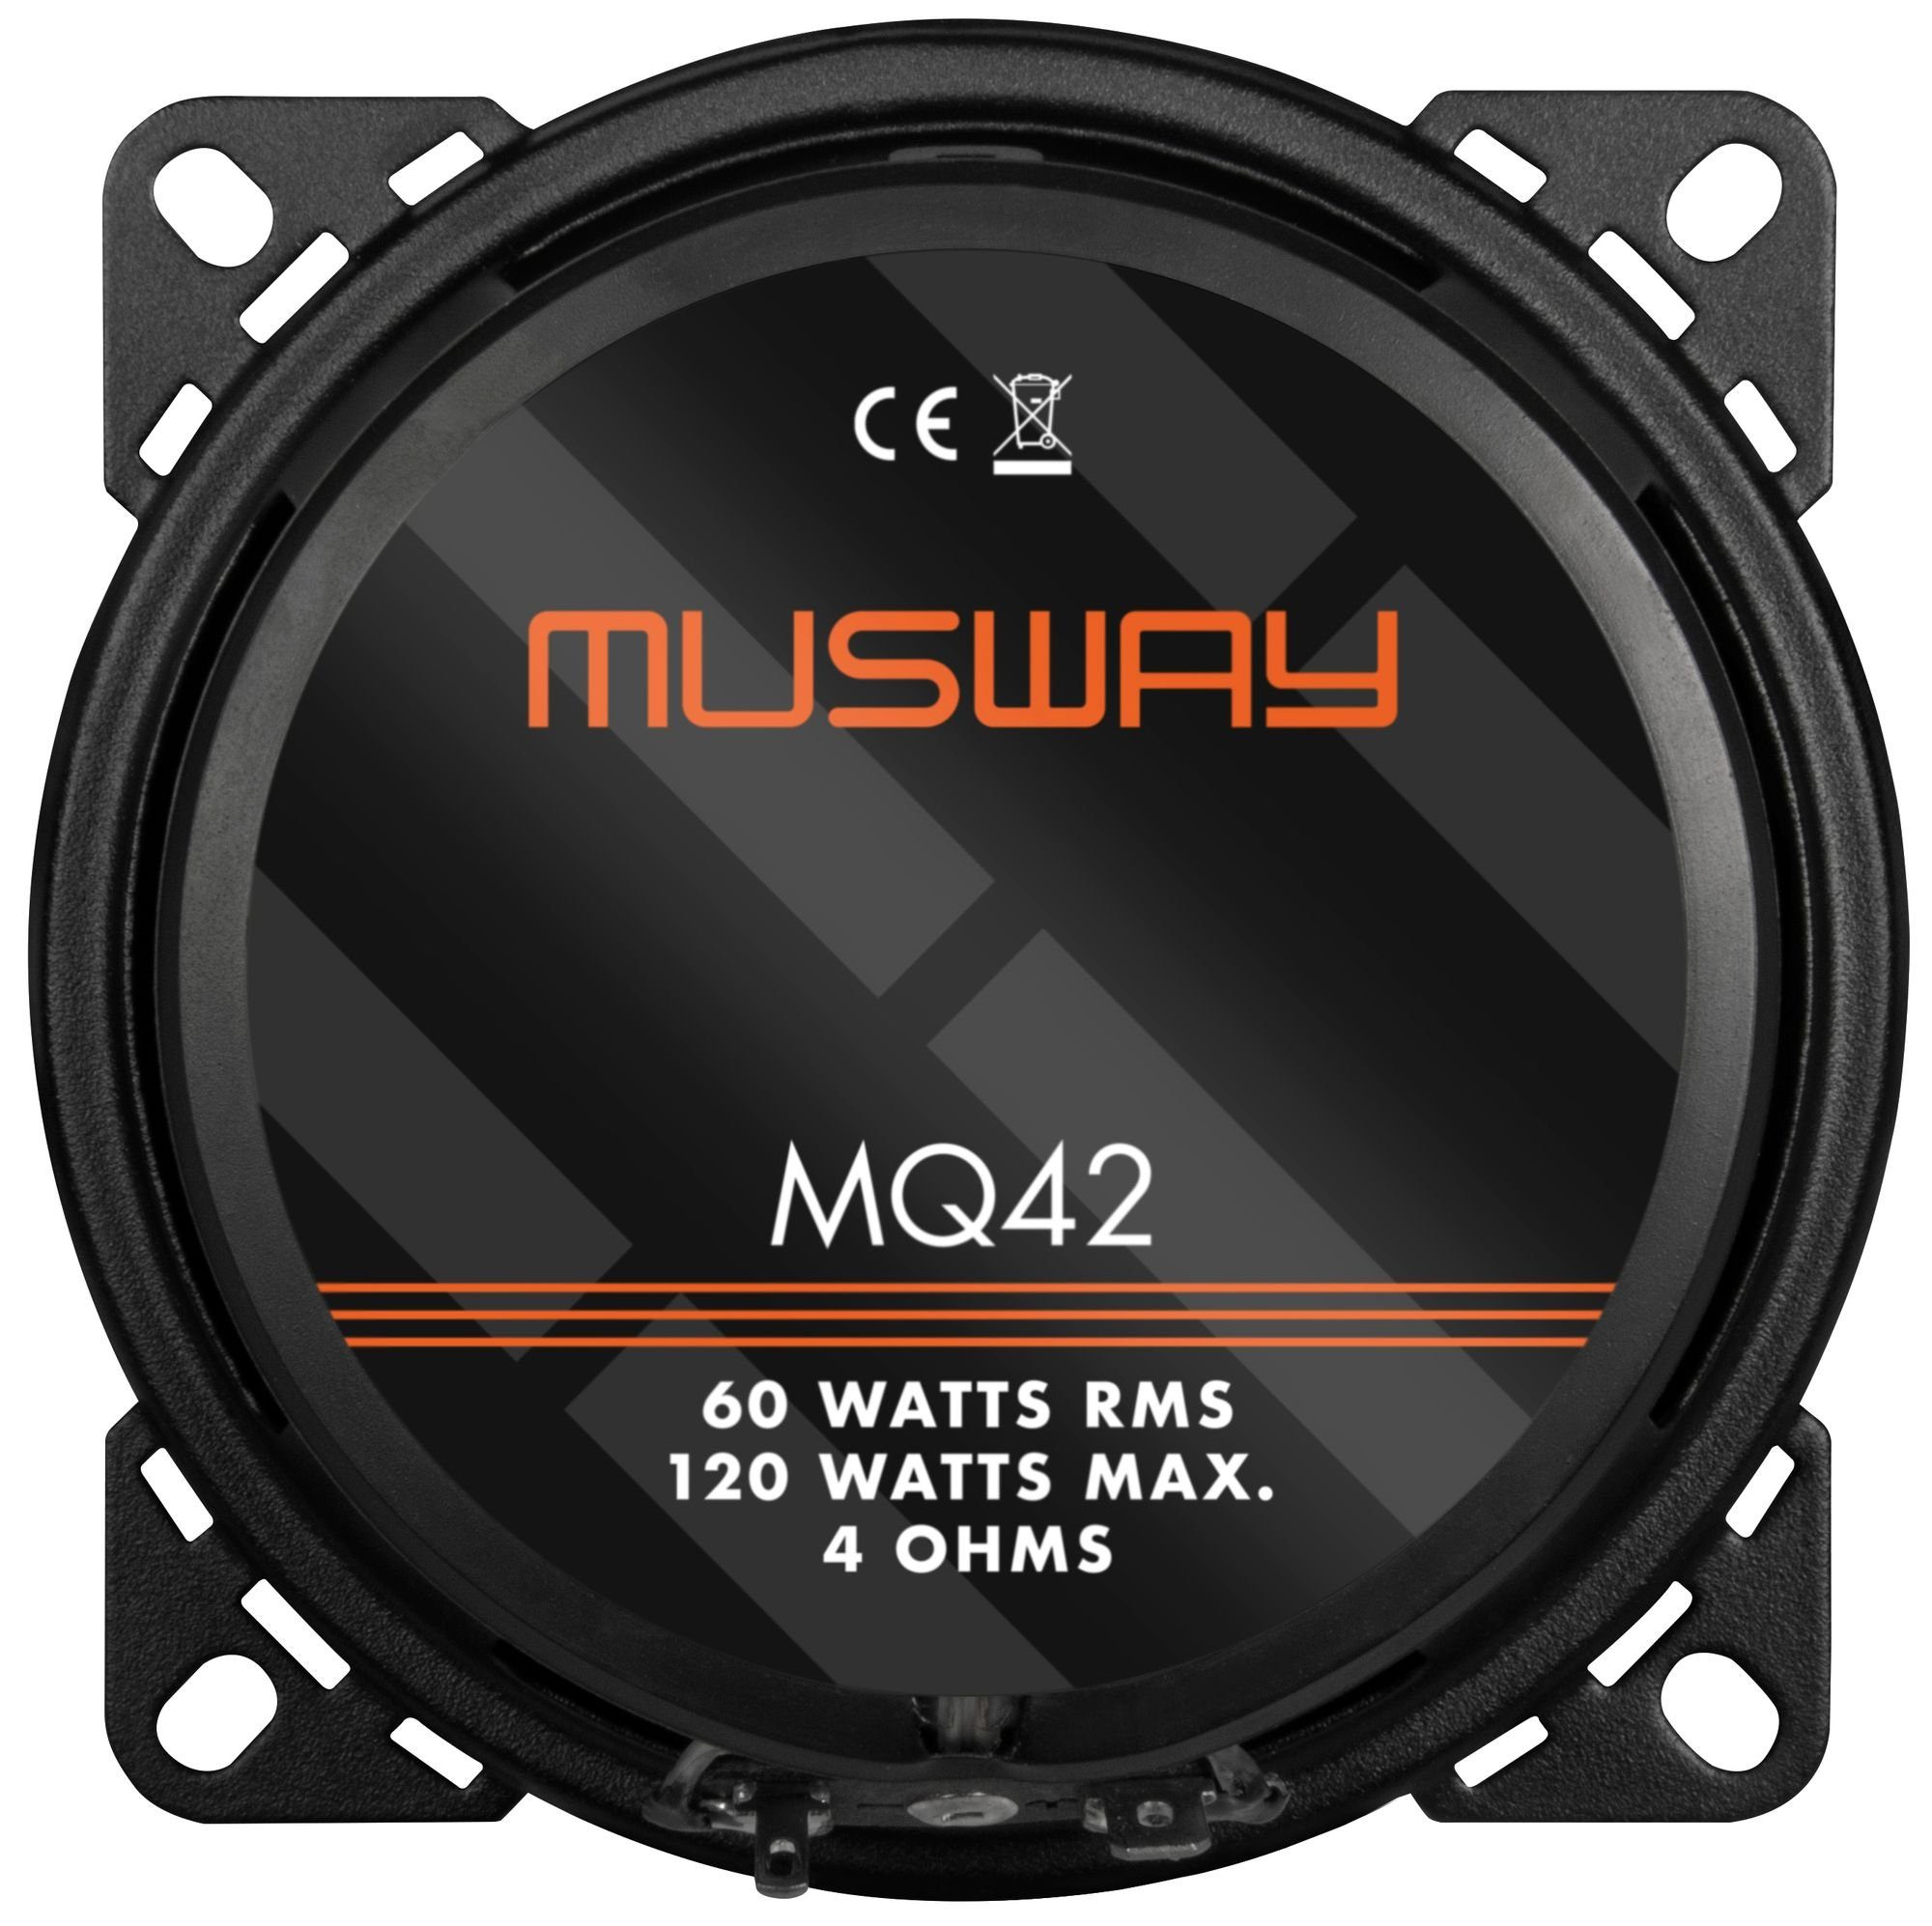 Auto-Lautsprecher MQ42 - Musway Koax 10cm (Musway Koax Lautsprecher 10cm Lautsprecher) Musway - MQ42